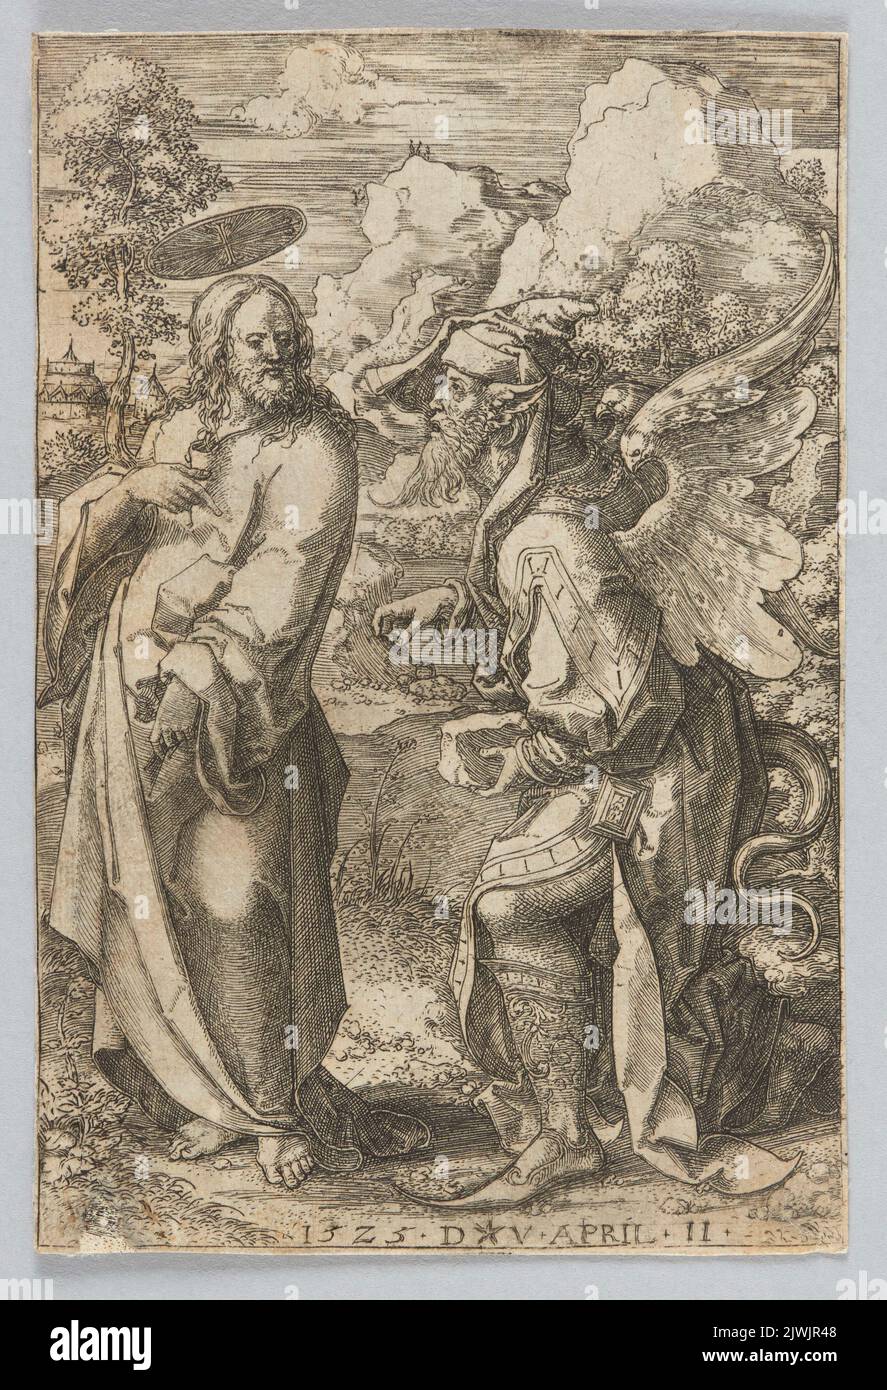 La tentazione di Cristo. Vellert, Dirk Jacobsz, Mistrz DV z gwiazdą (Star) (fl. CA 1511-1547), artista grafico Foto Stock